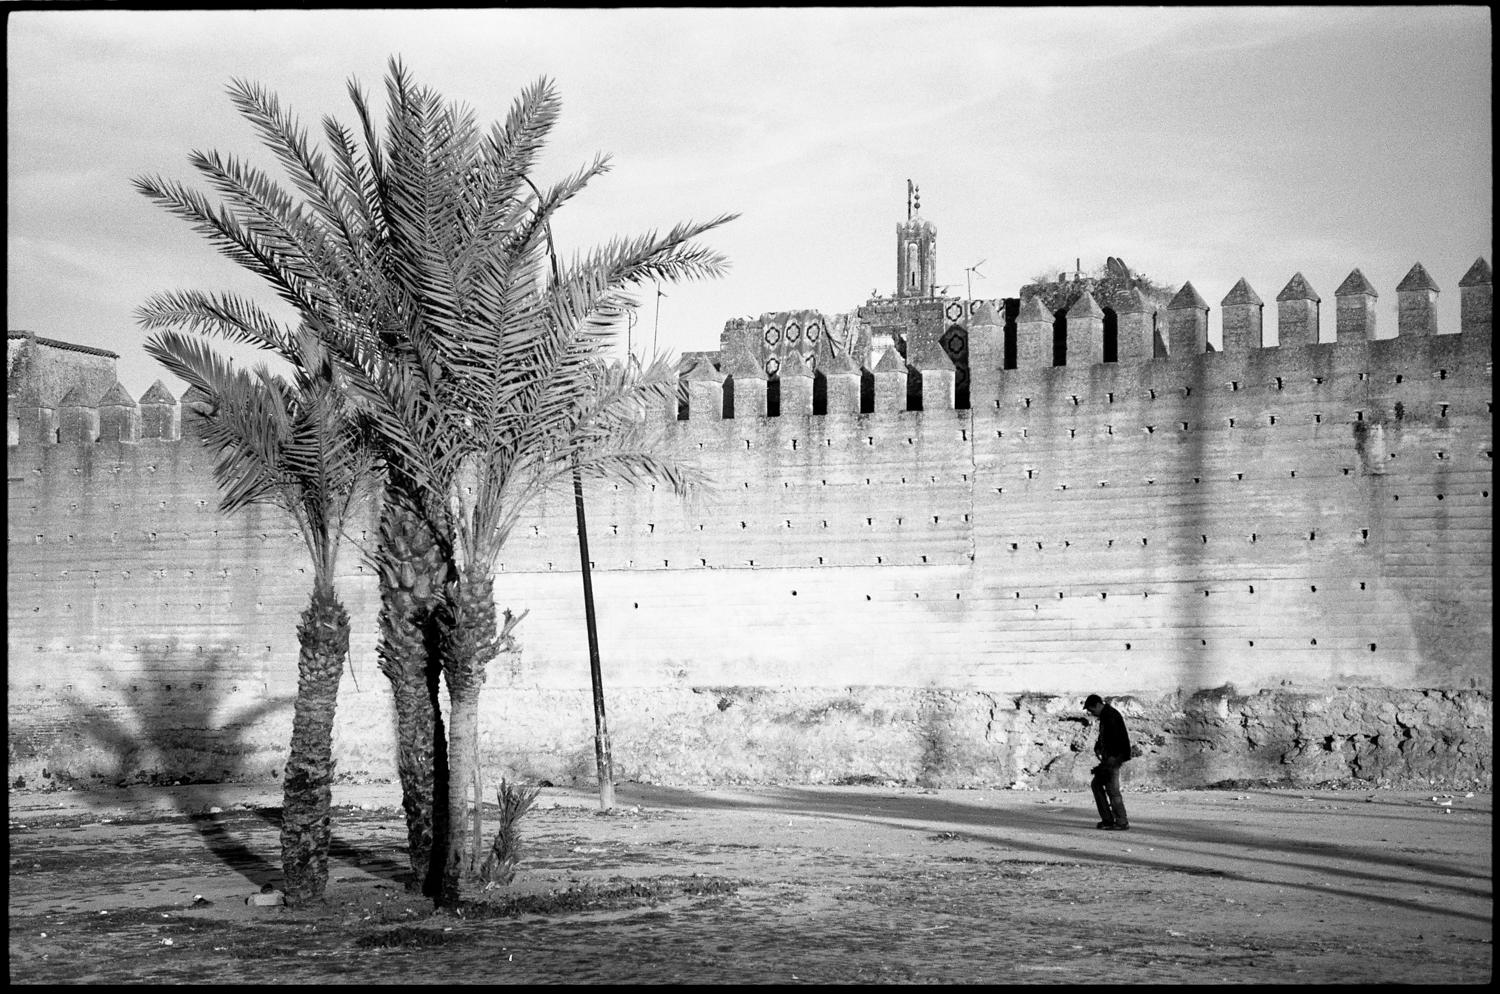 Paul Cooklin Landscape Photograph - Edition 2/10 - Walls of the Mechouar, Fes, Morocco, Silver Gelatin Photograph